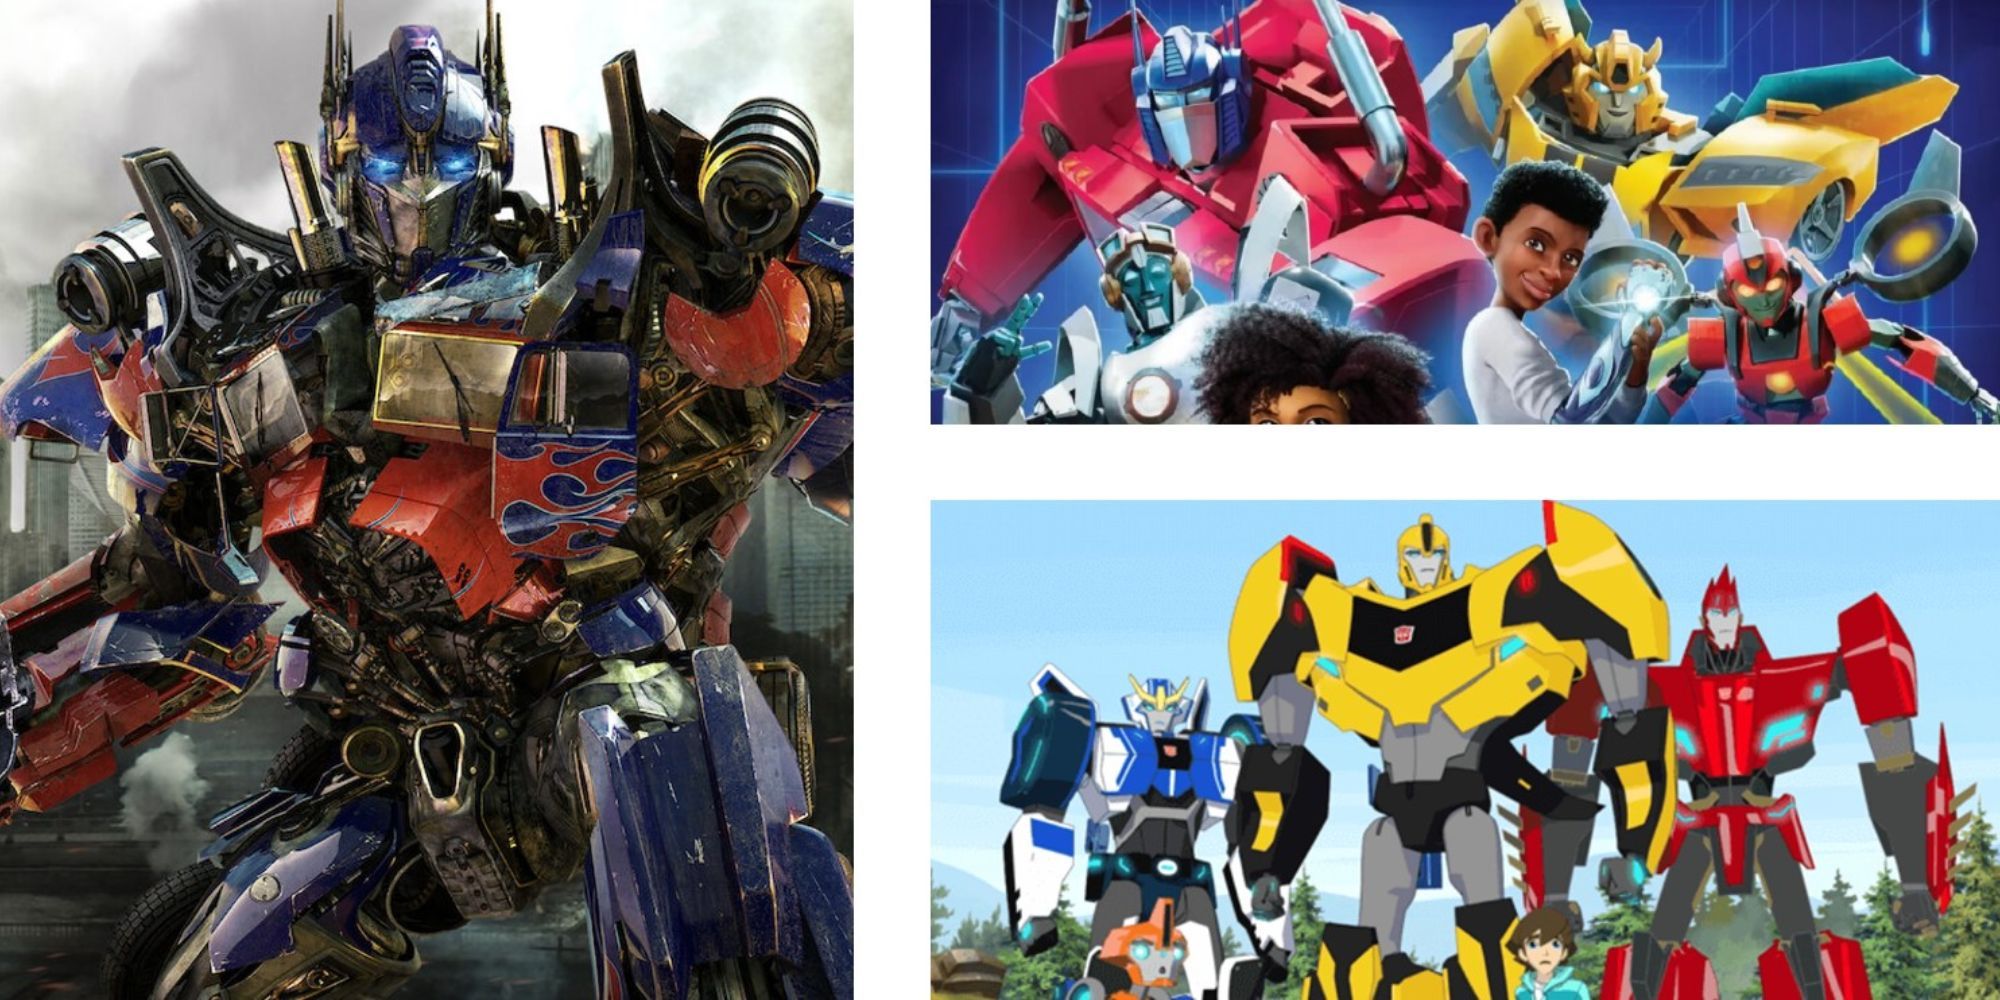 Transformers World: Personagens de Transformers Animated: Autobots